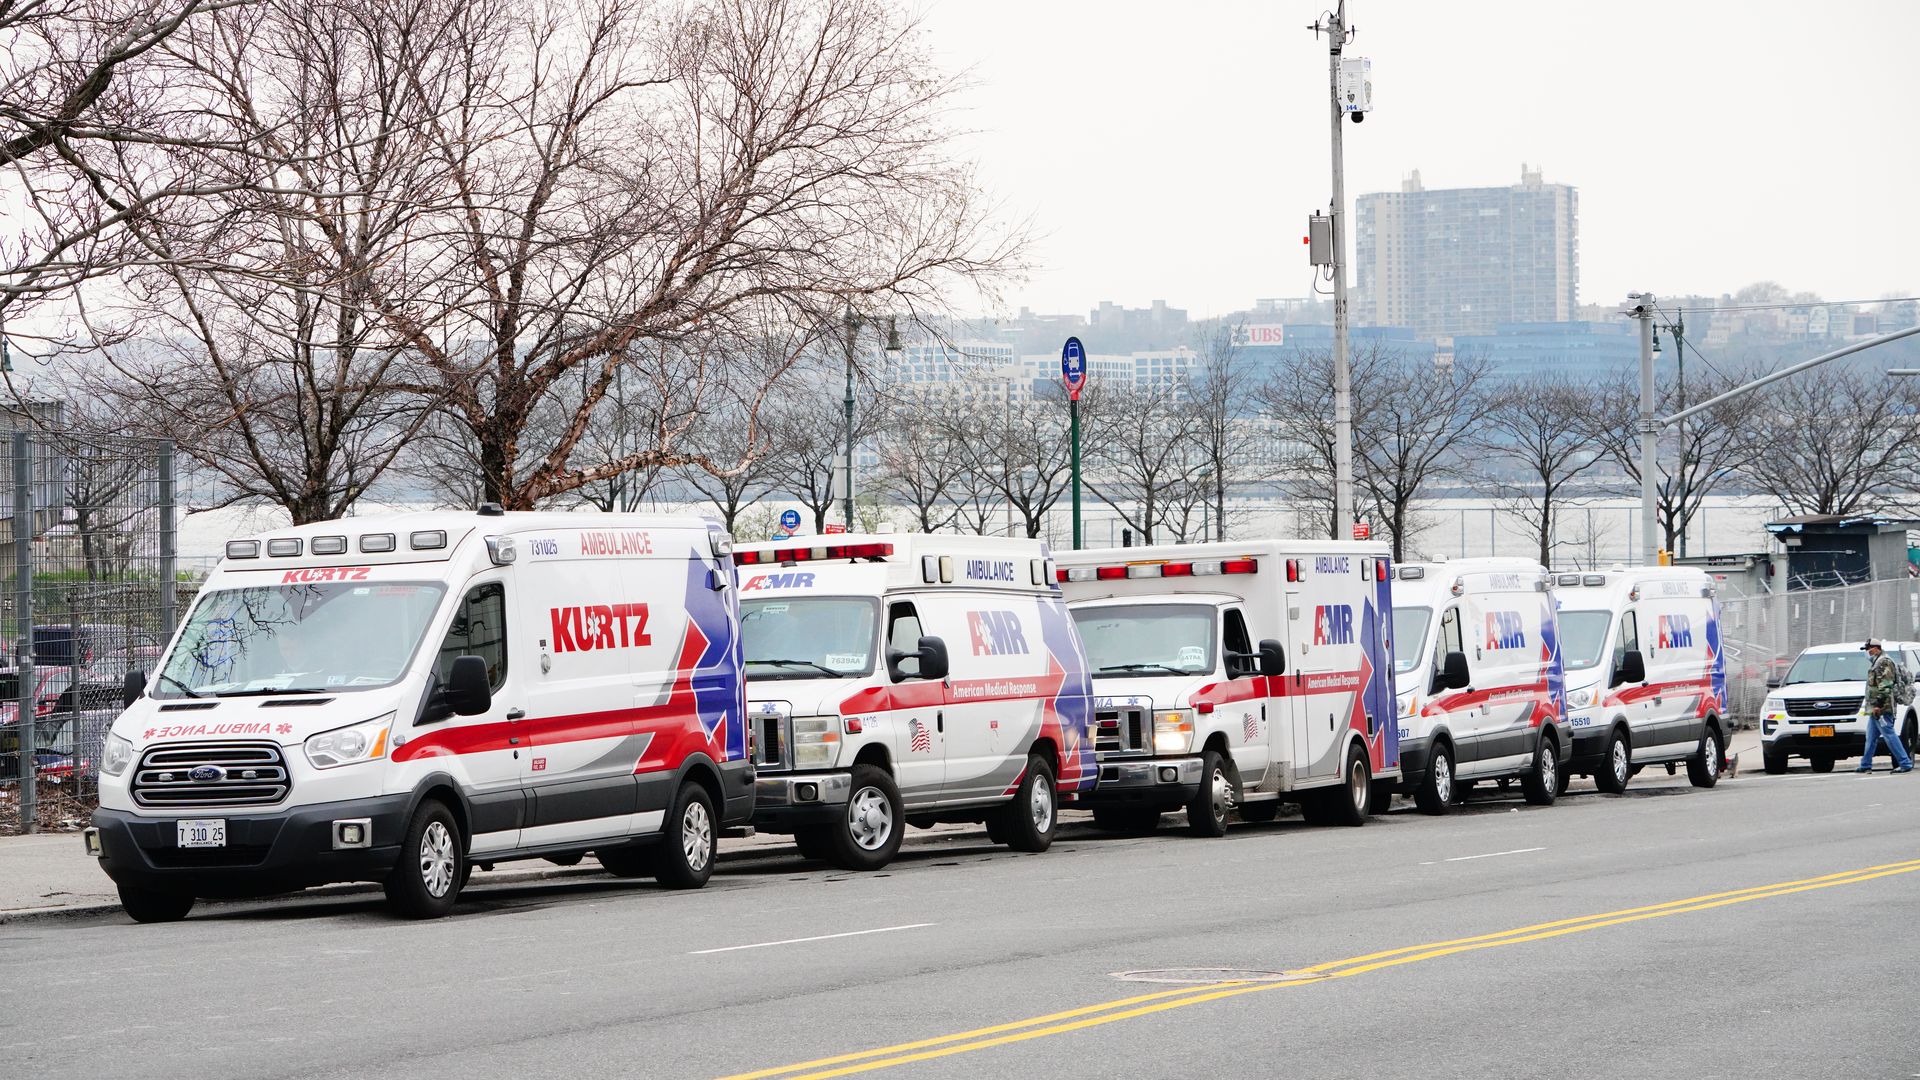 Ambulances lined up